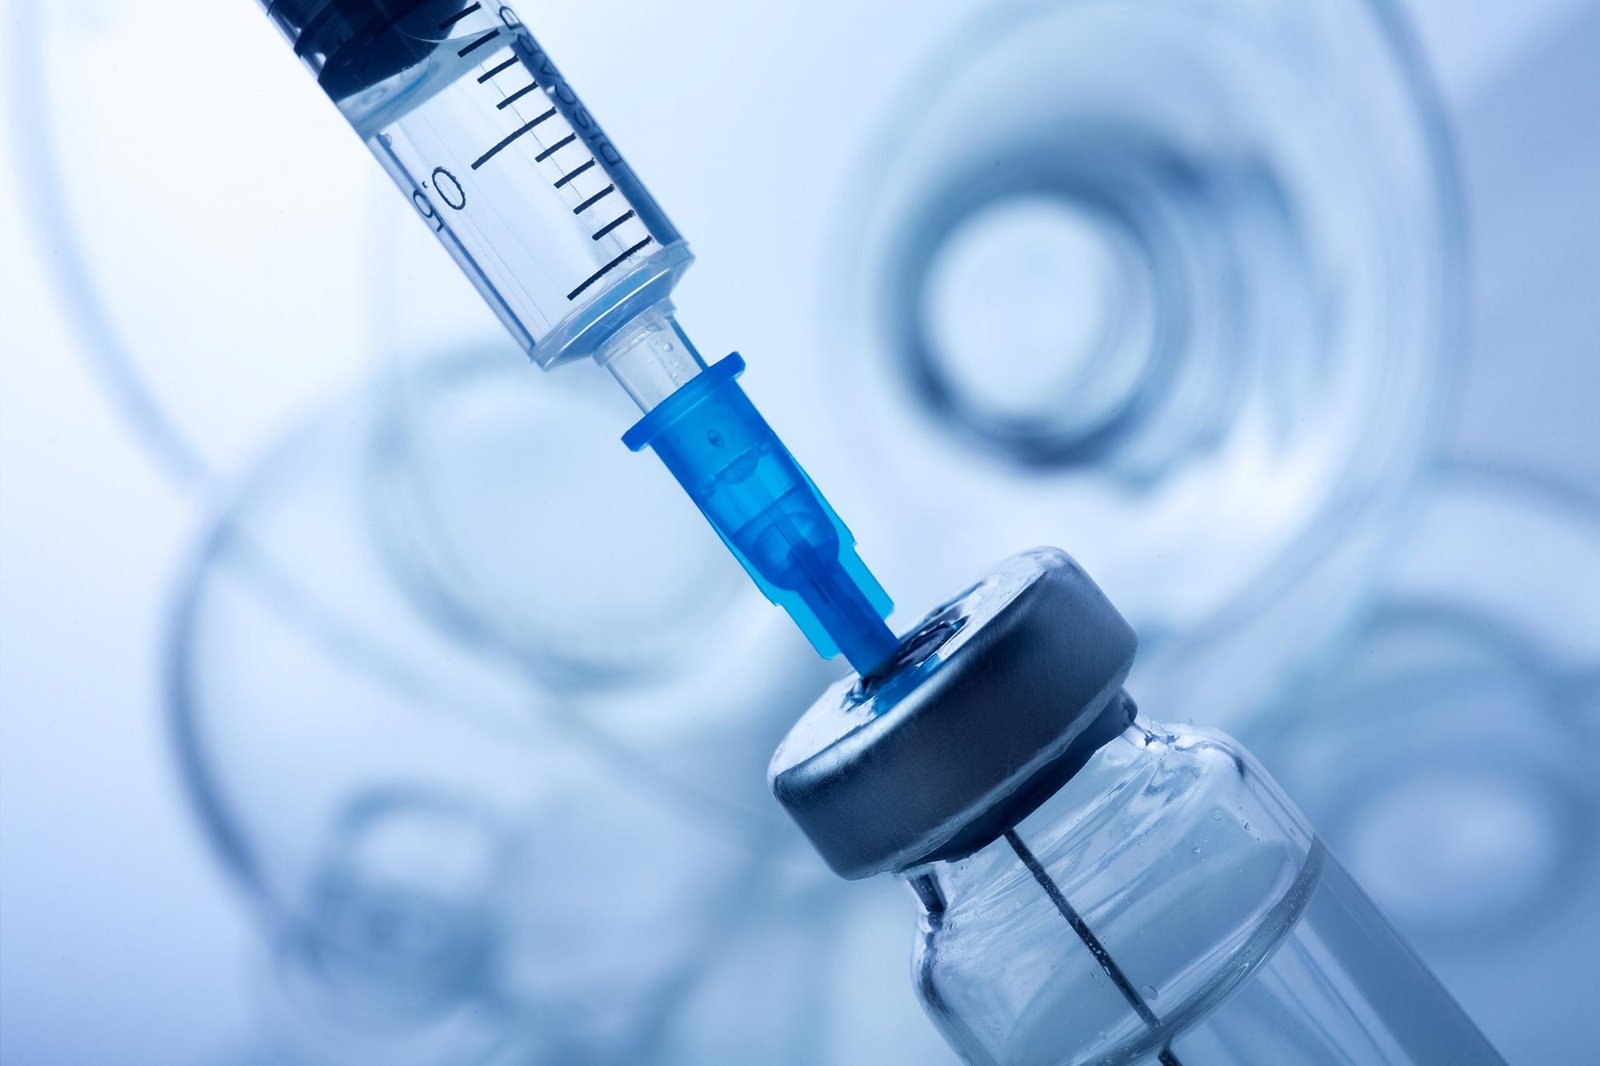 Scripps Scientists Pioneer Vaccine To Combat Deadly “Zombie Drug” Xylazine